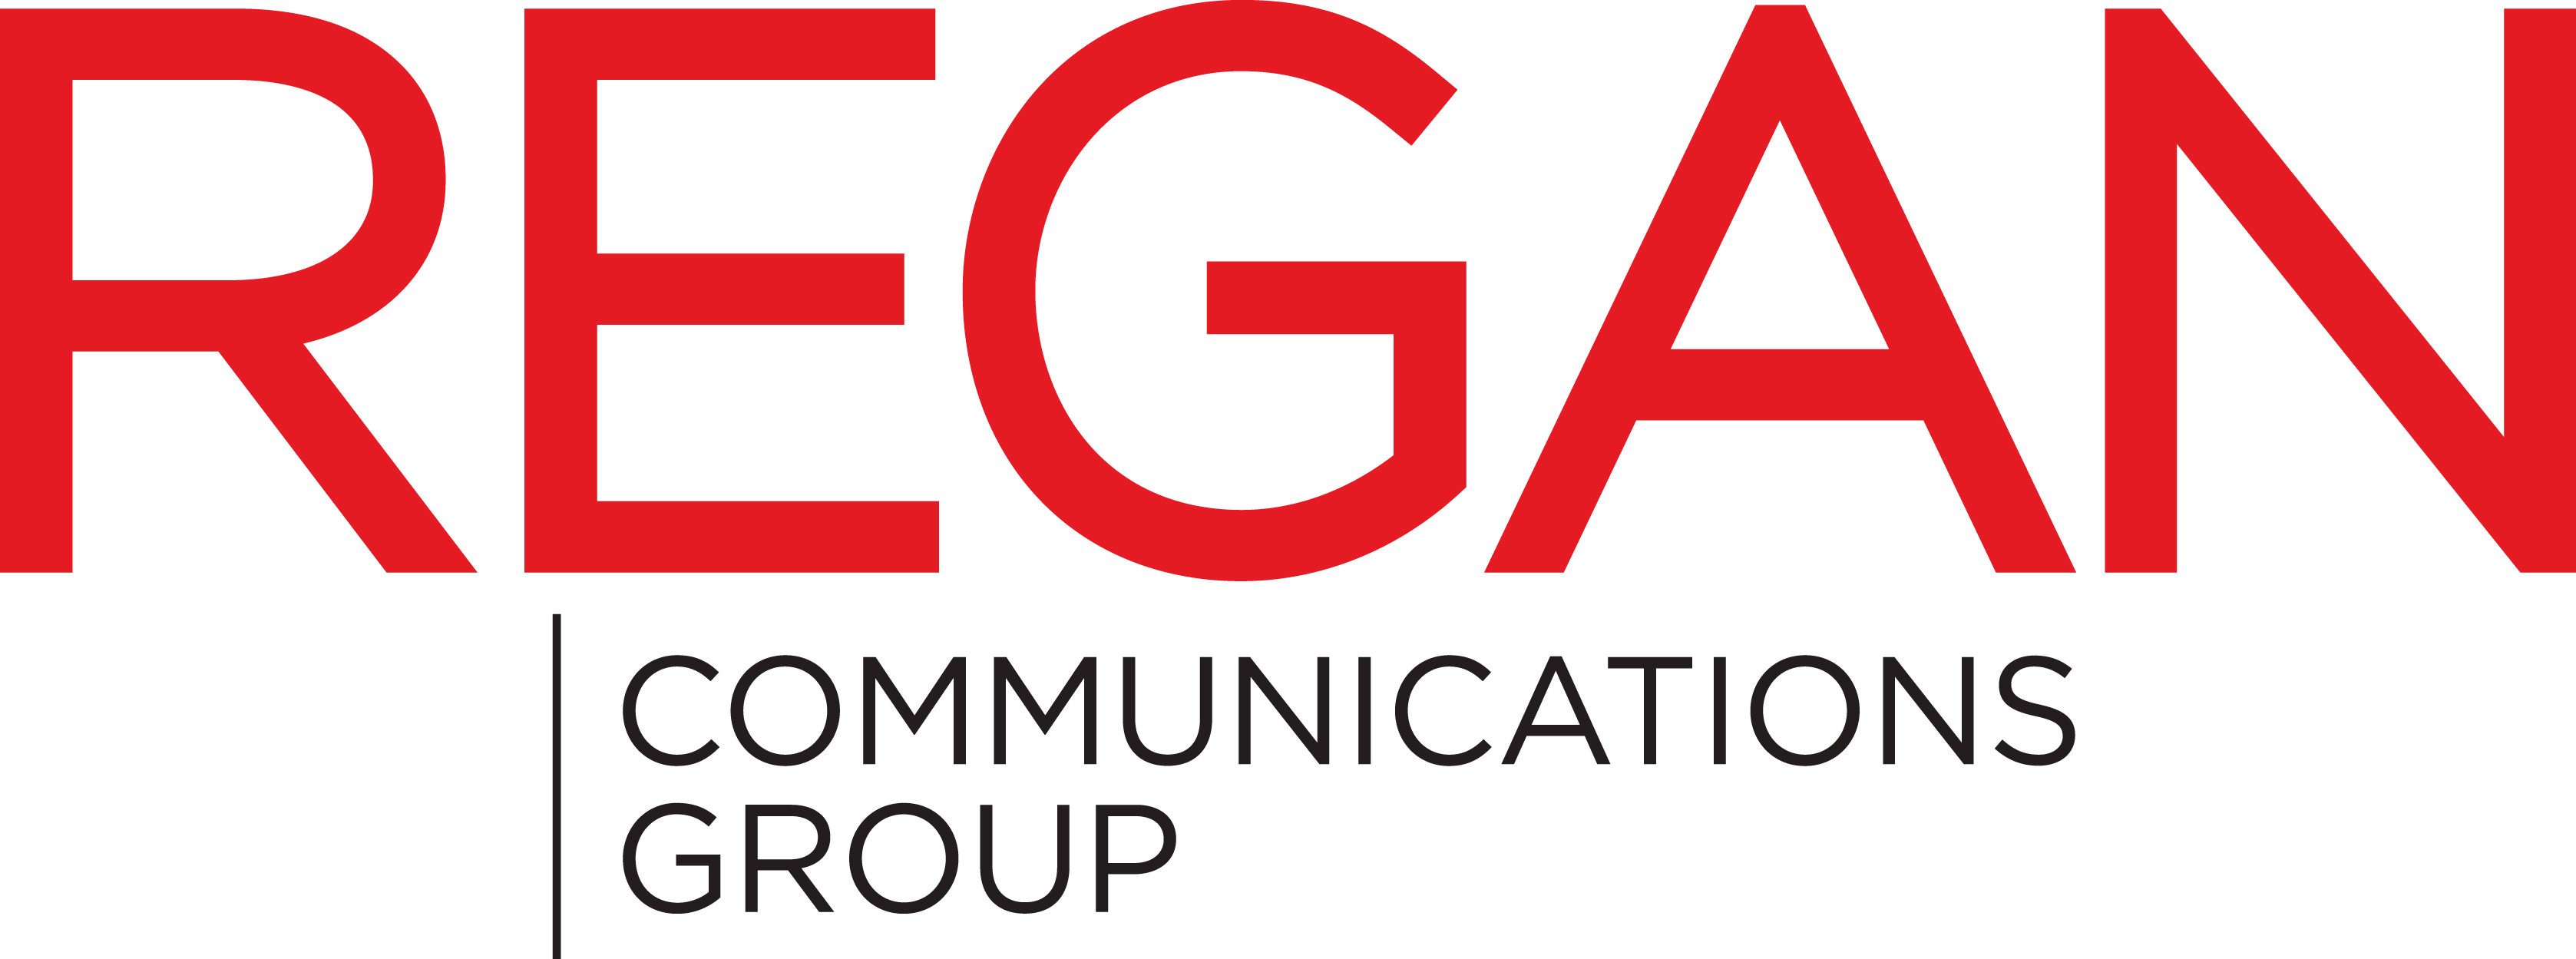  Top PR Firm Logo: Regan Communications Group